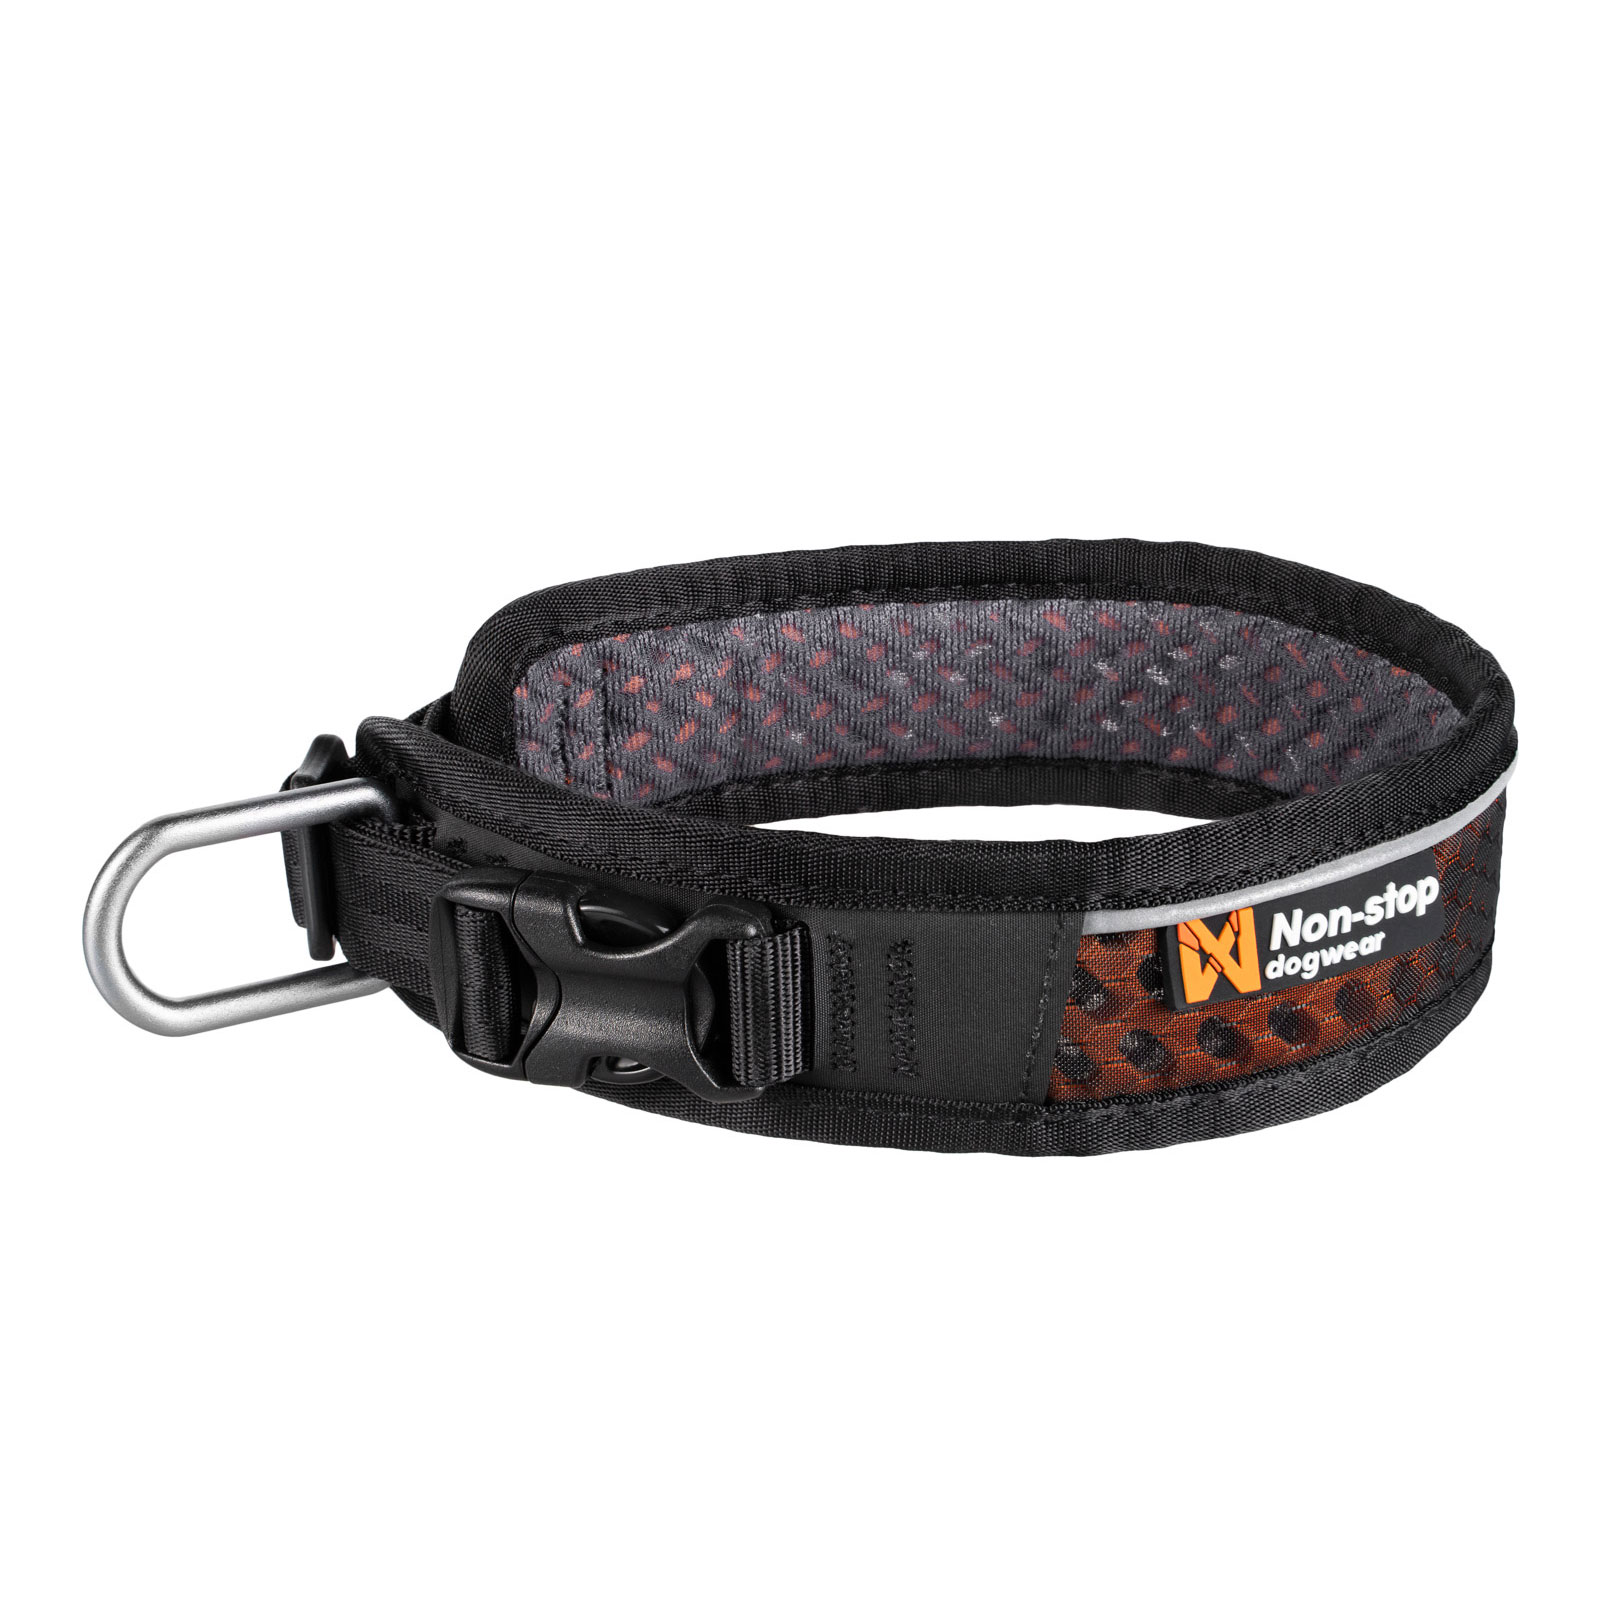 Non-stop dogwear ROCK Collar Adjustable | 3446 | Halsband von Non-stop dogwear